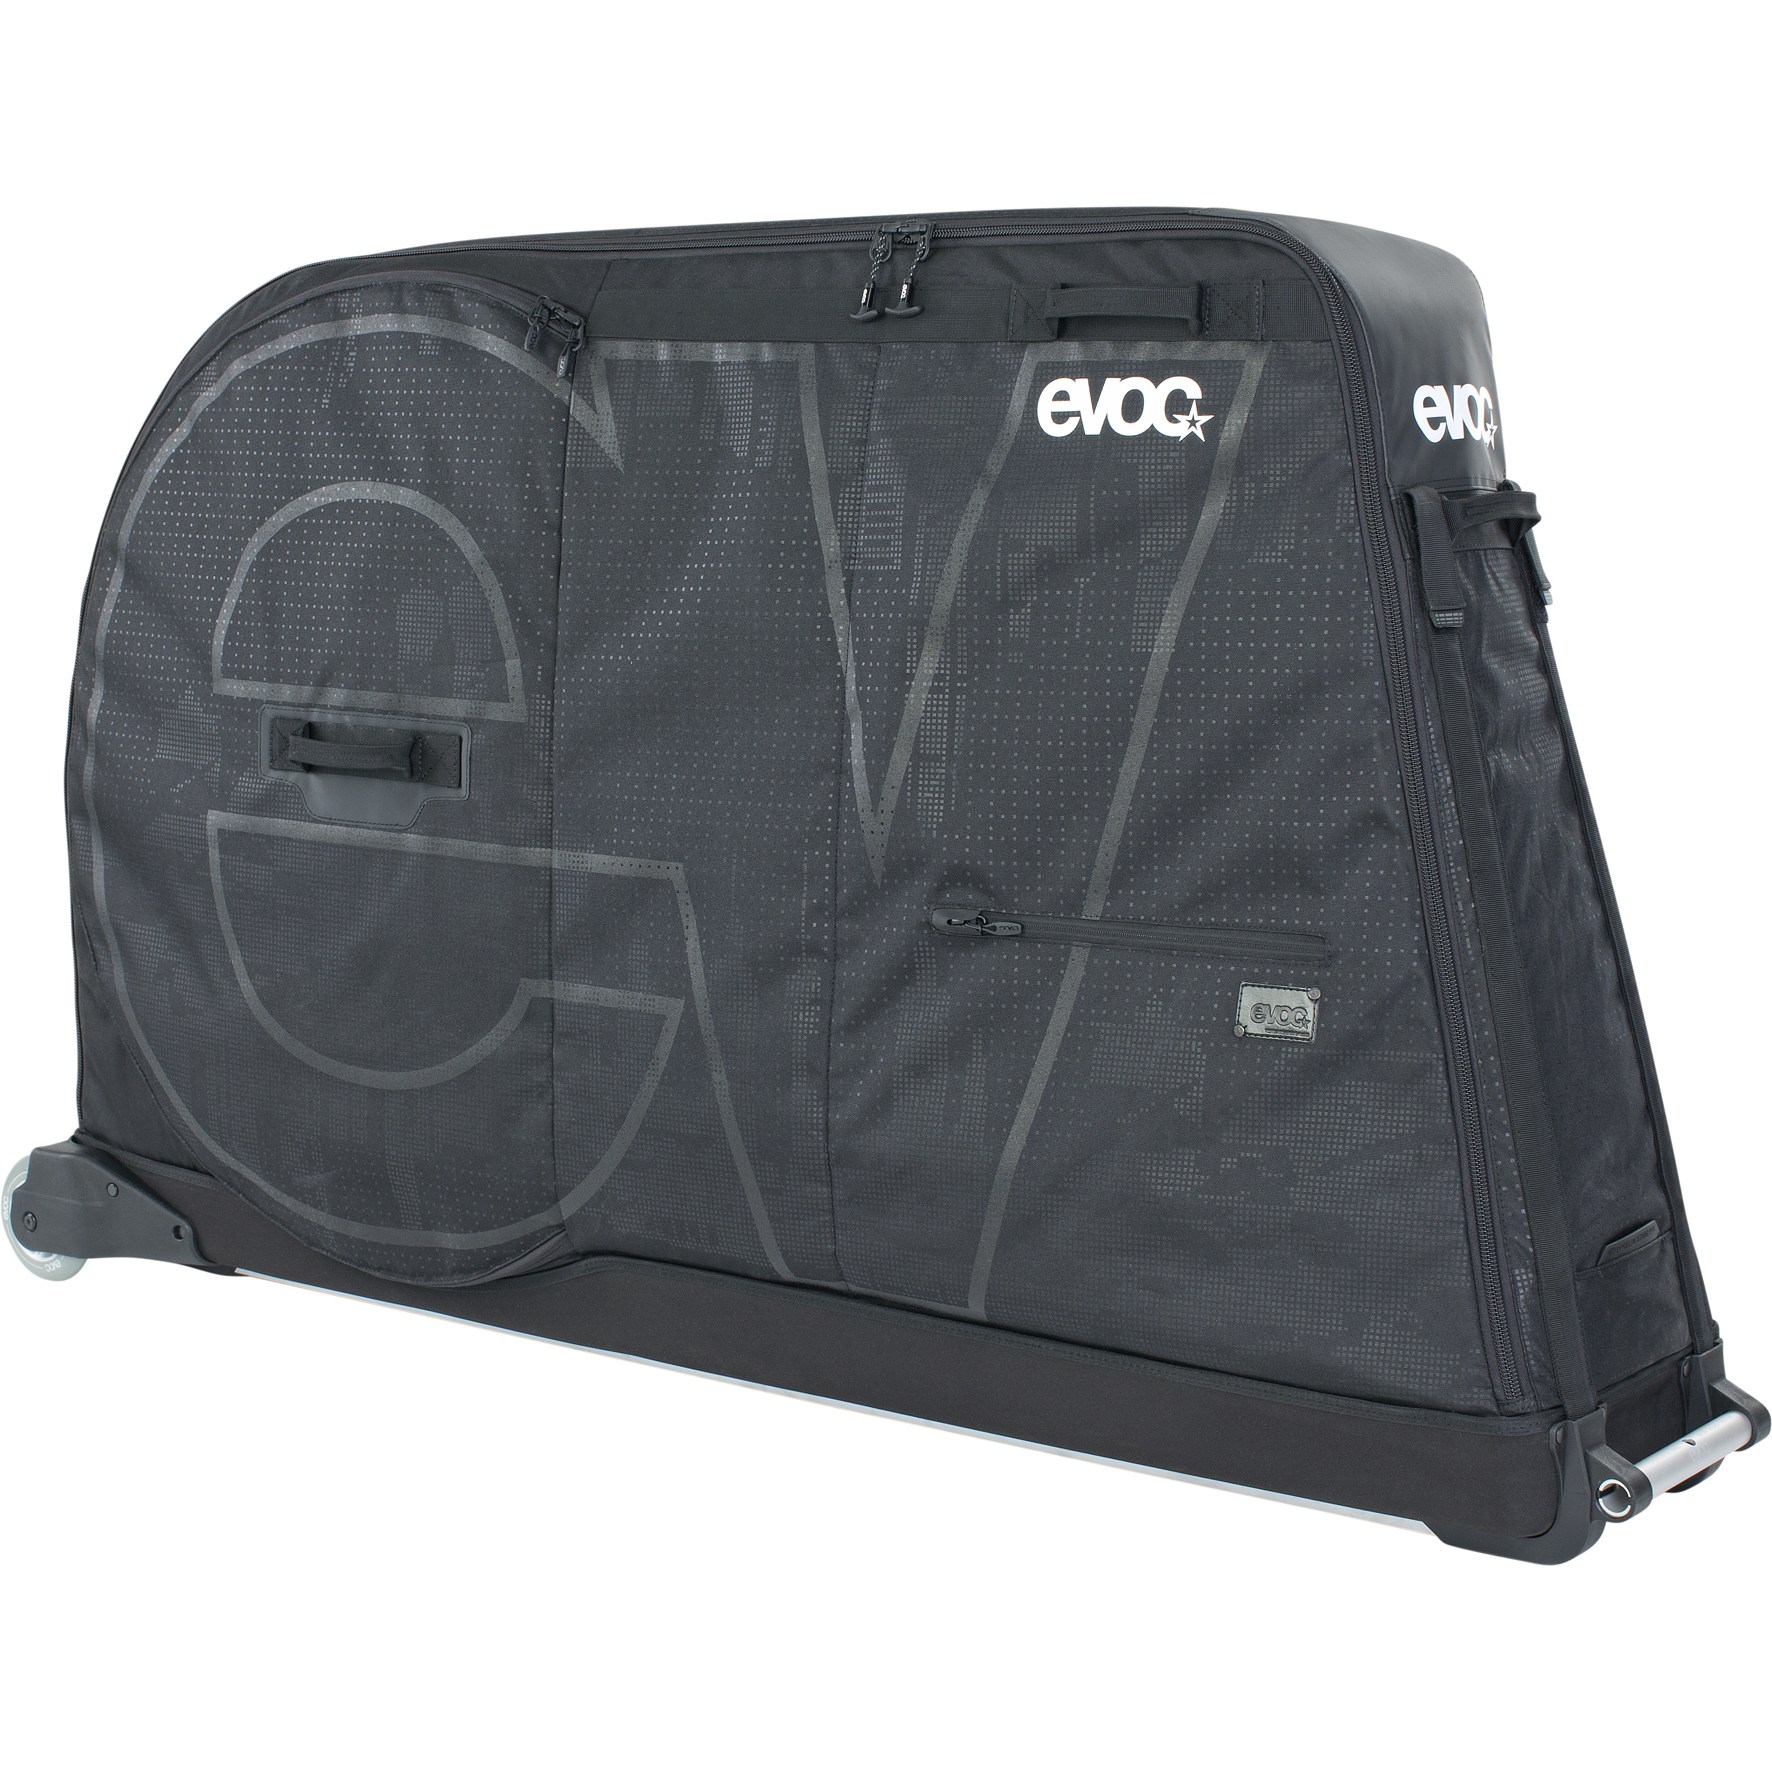 Productfoto van EVOC Bike Bag Pro 305L Fietstas - Black